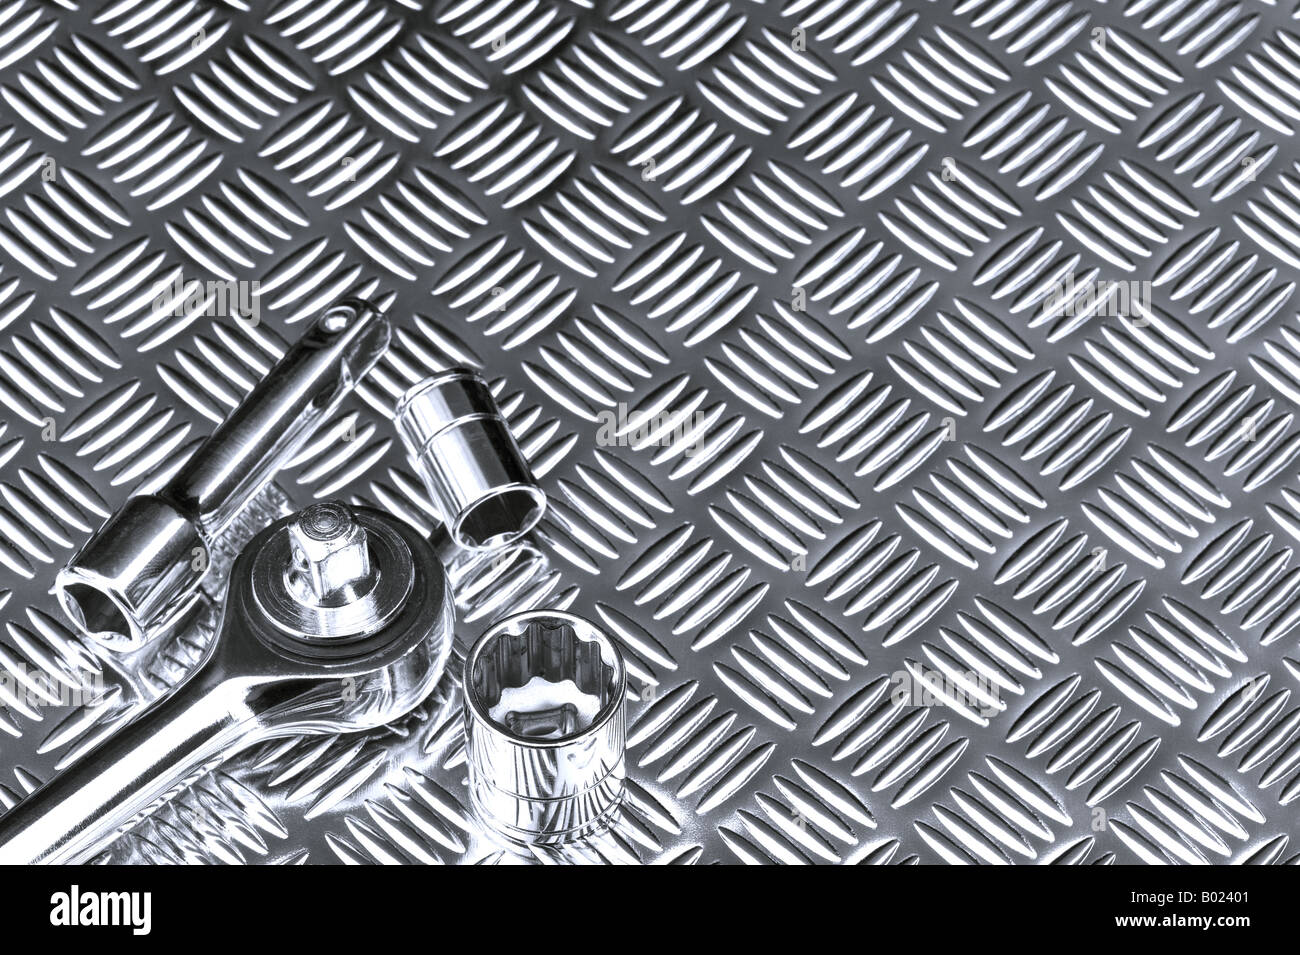 Mechanical background image of socket set on a checkerplate workbench Stock Photo